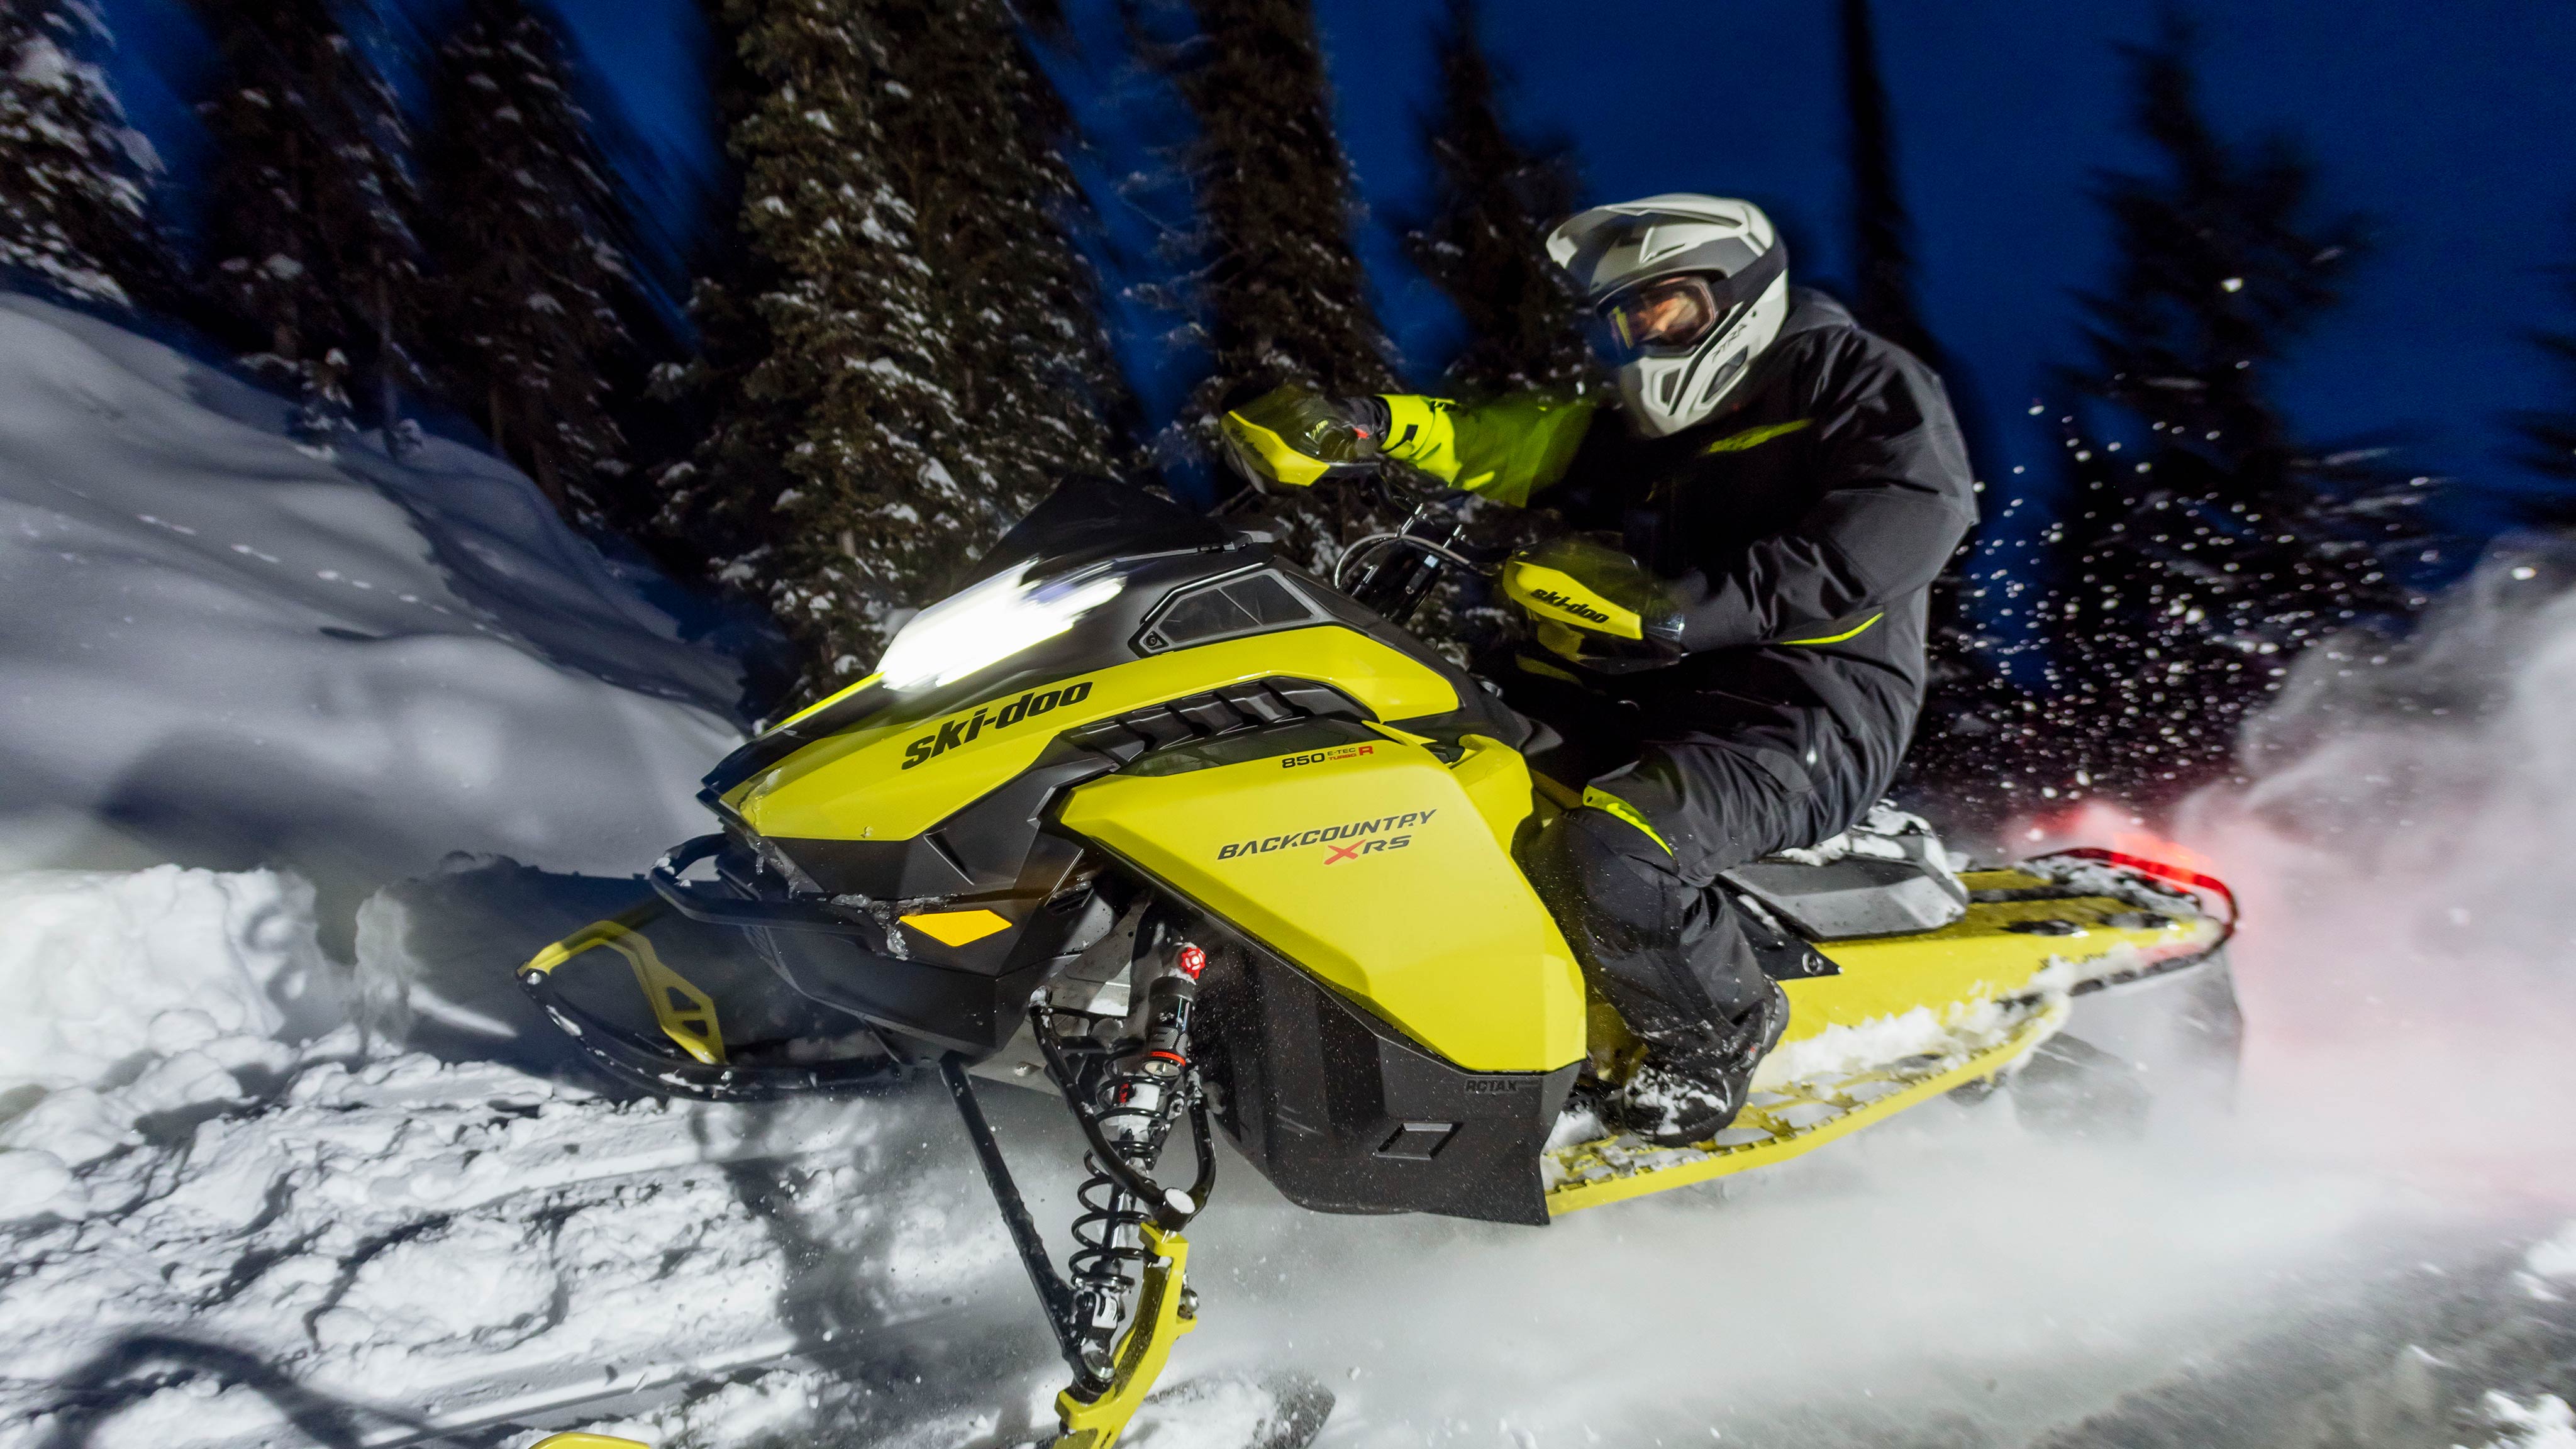 2025 Ski-Doo Crossover Backcountry snowmobile riding through fresh snow